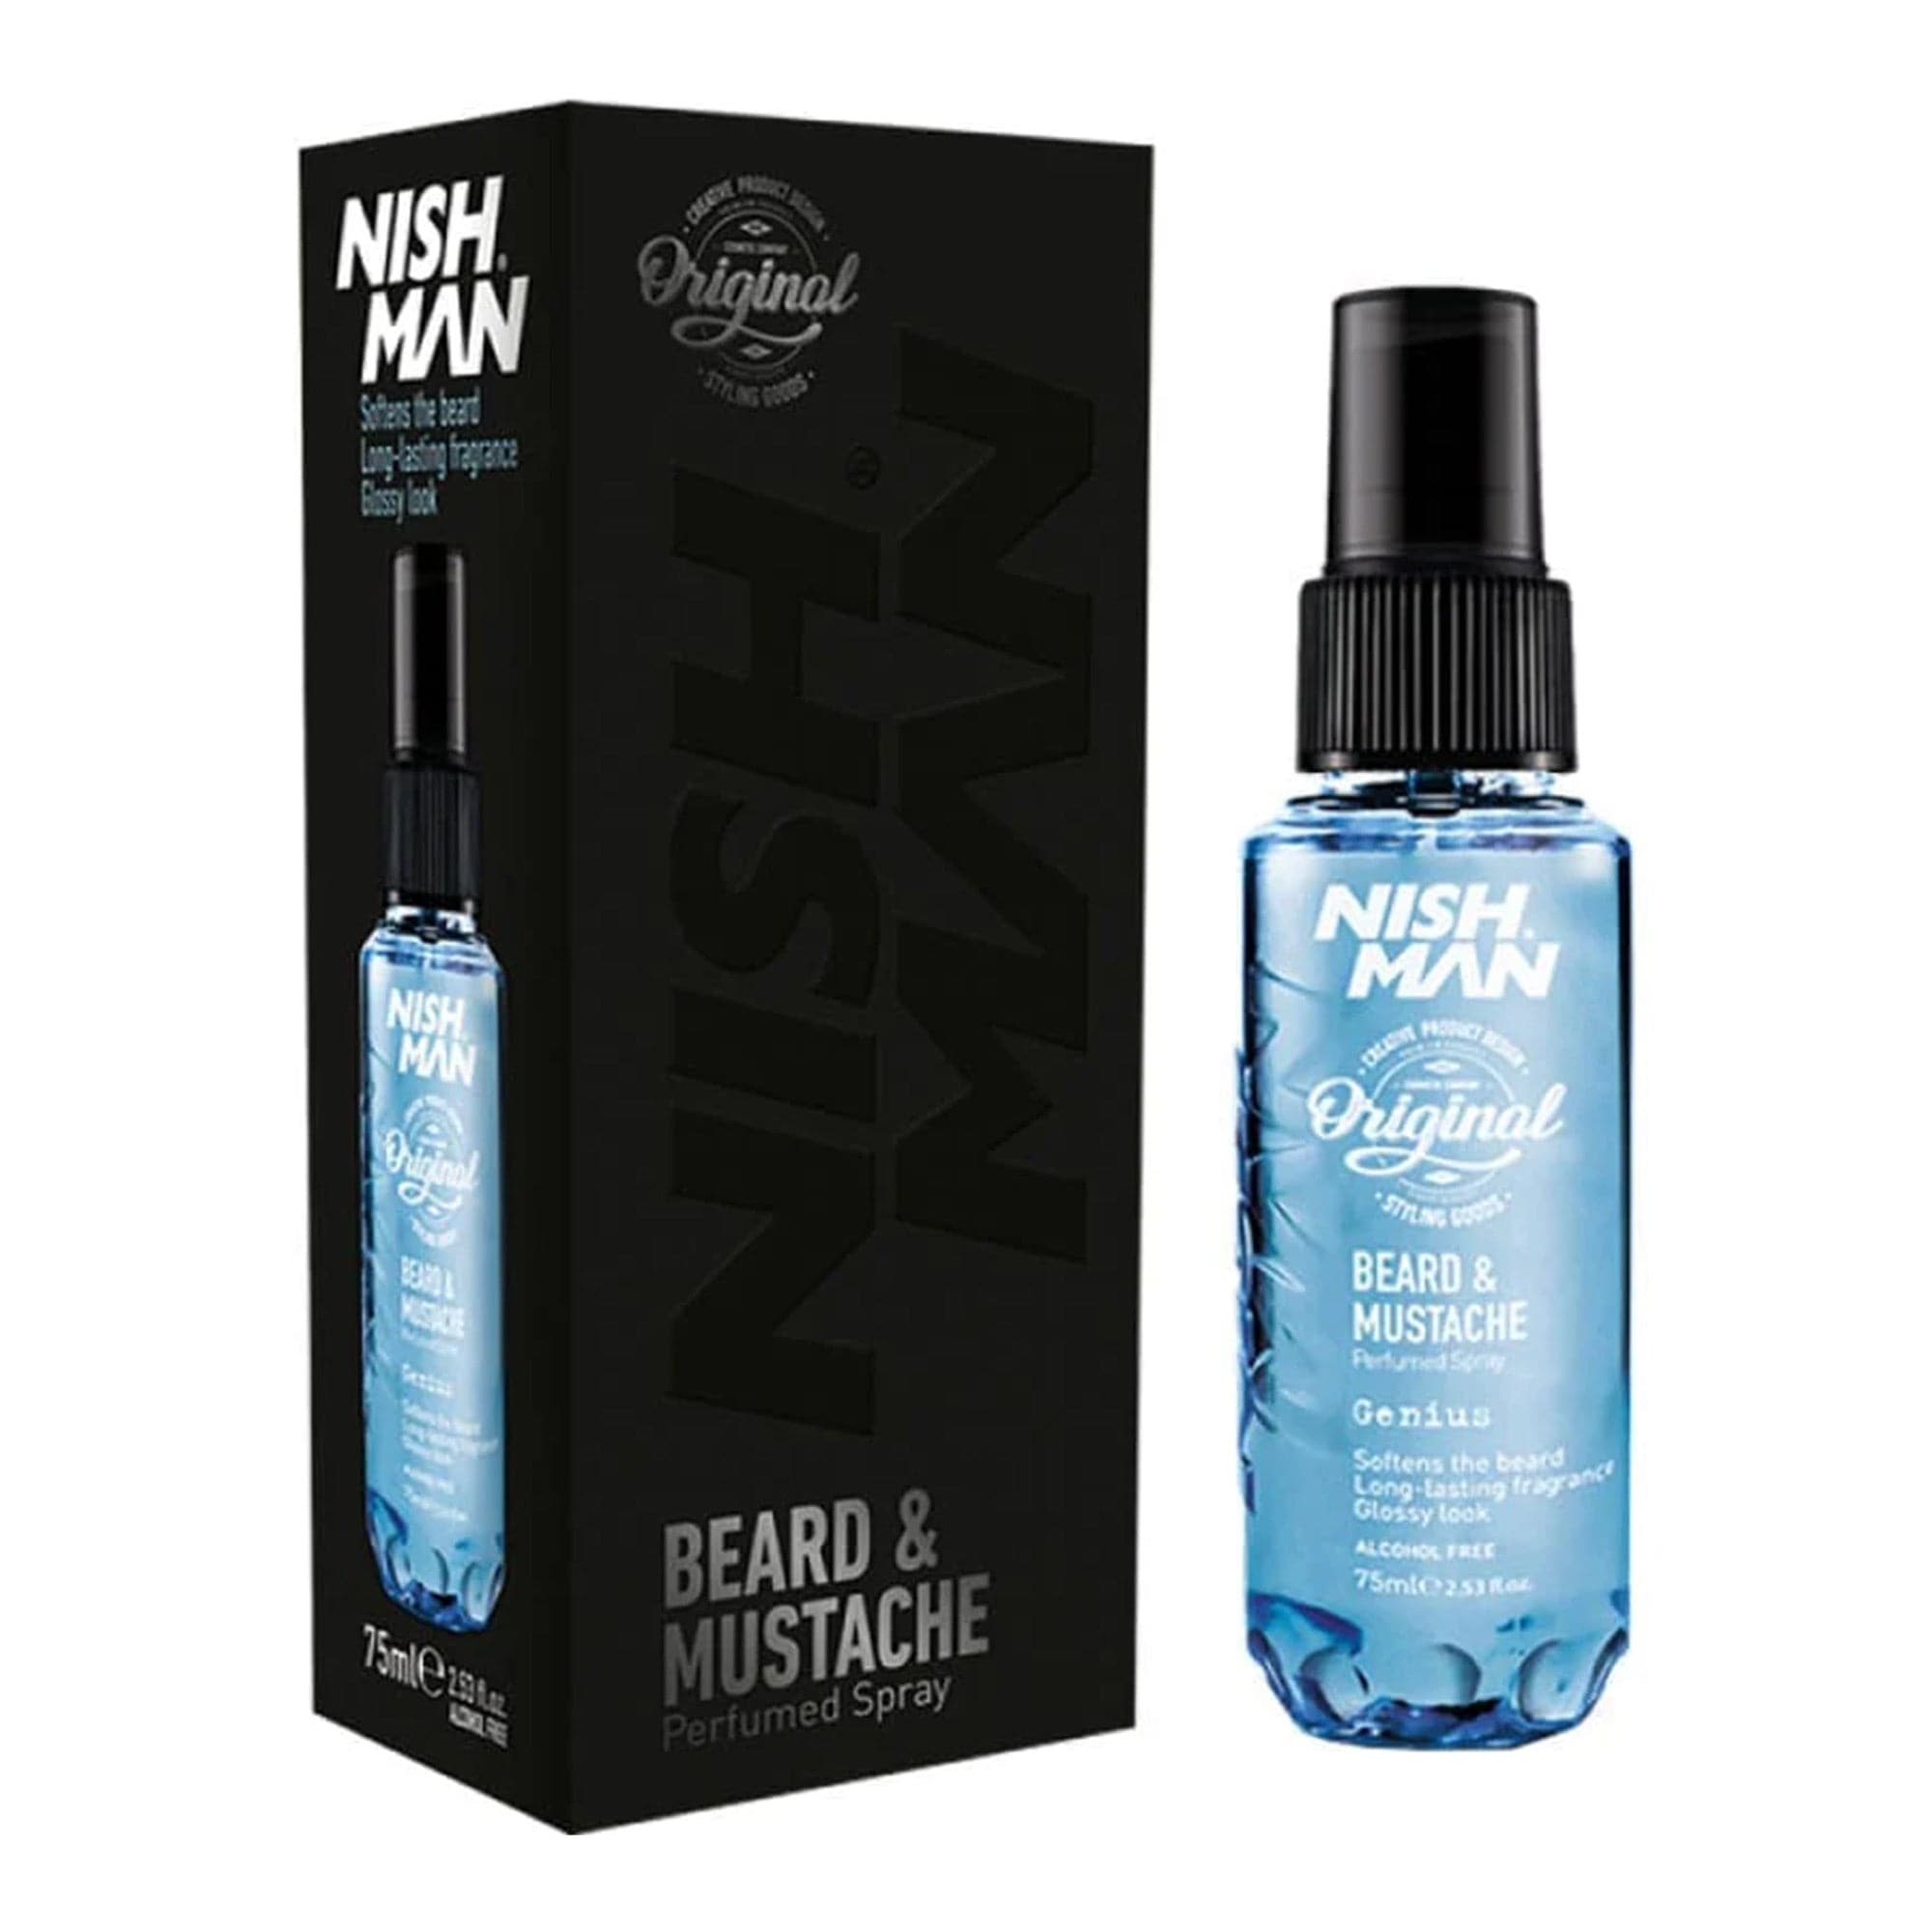 Nishman - Beard & Mustache Perfumed Spray Genius 75ml